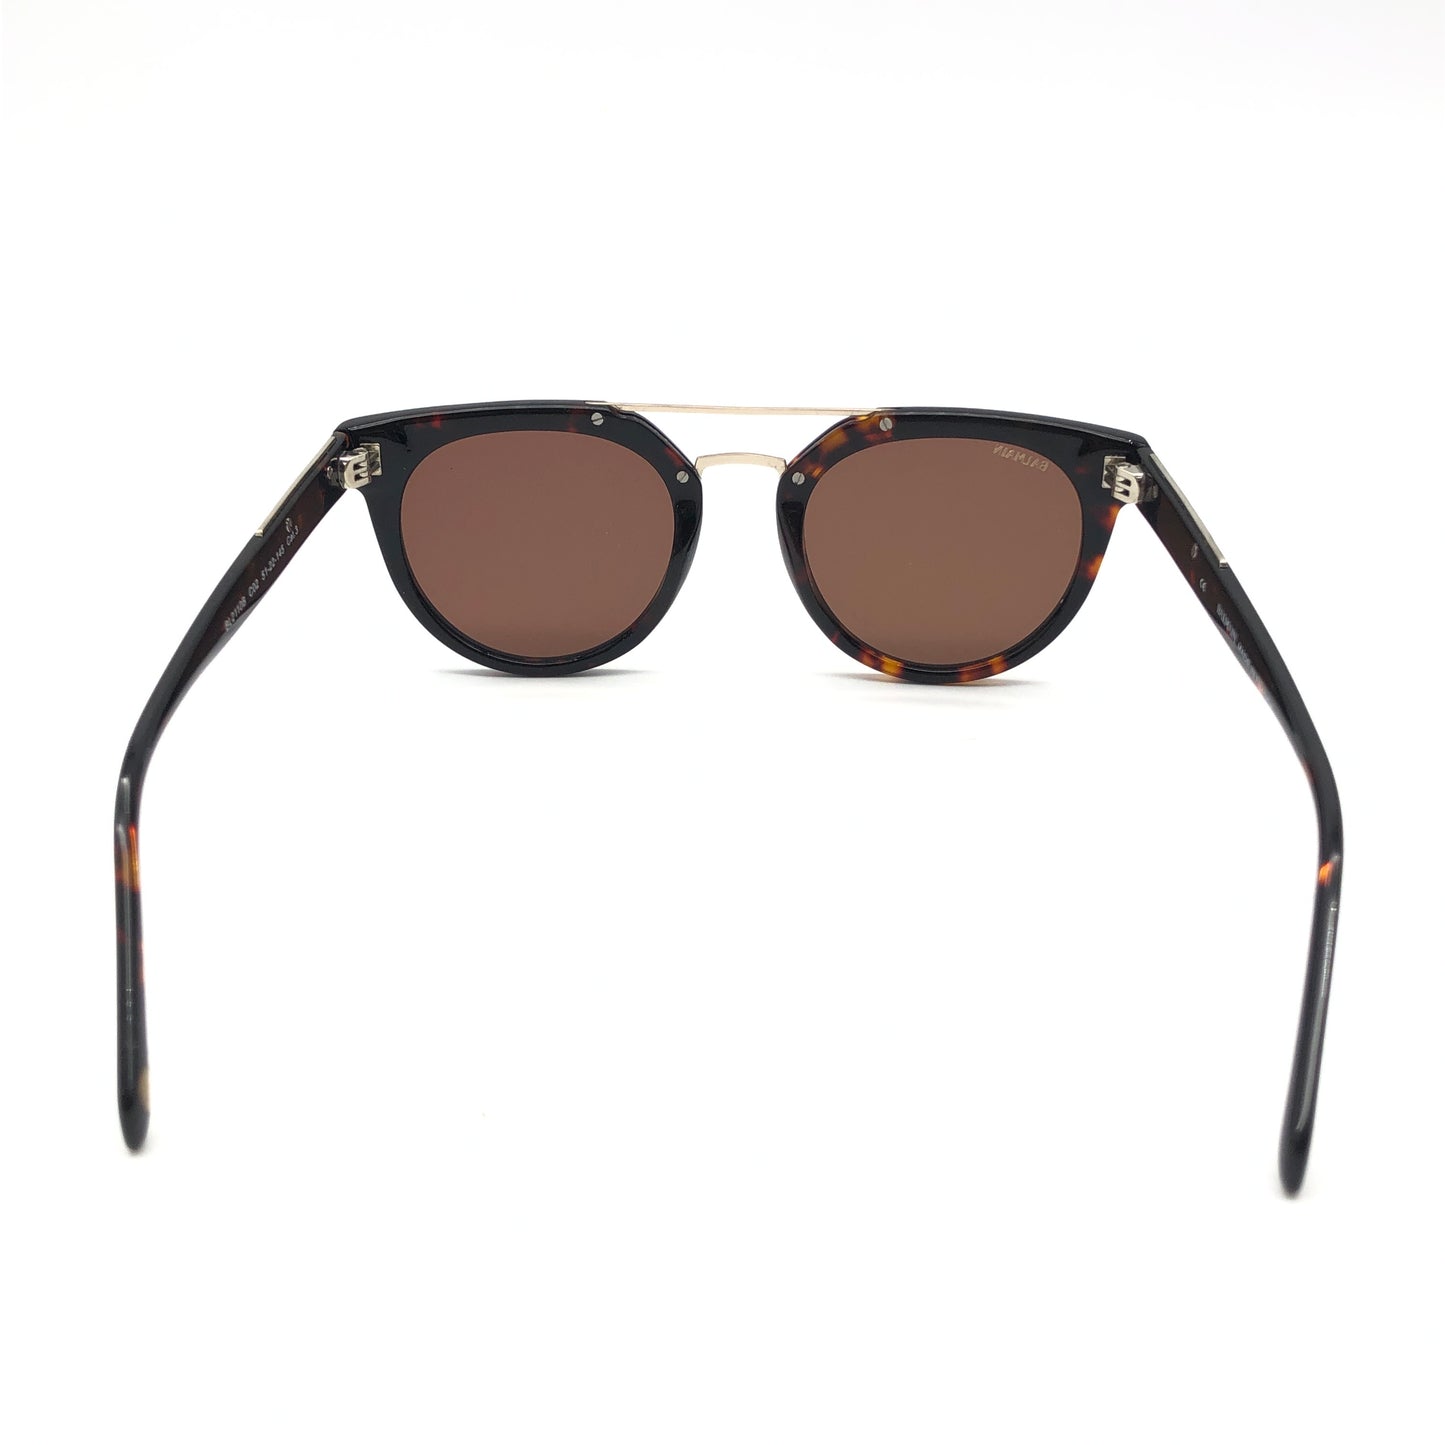 Sunglasses By Balmain